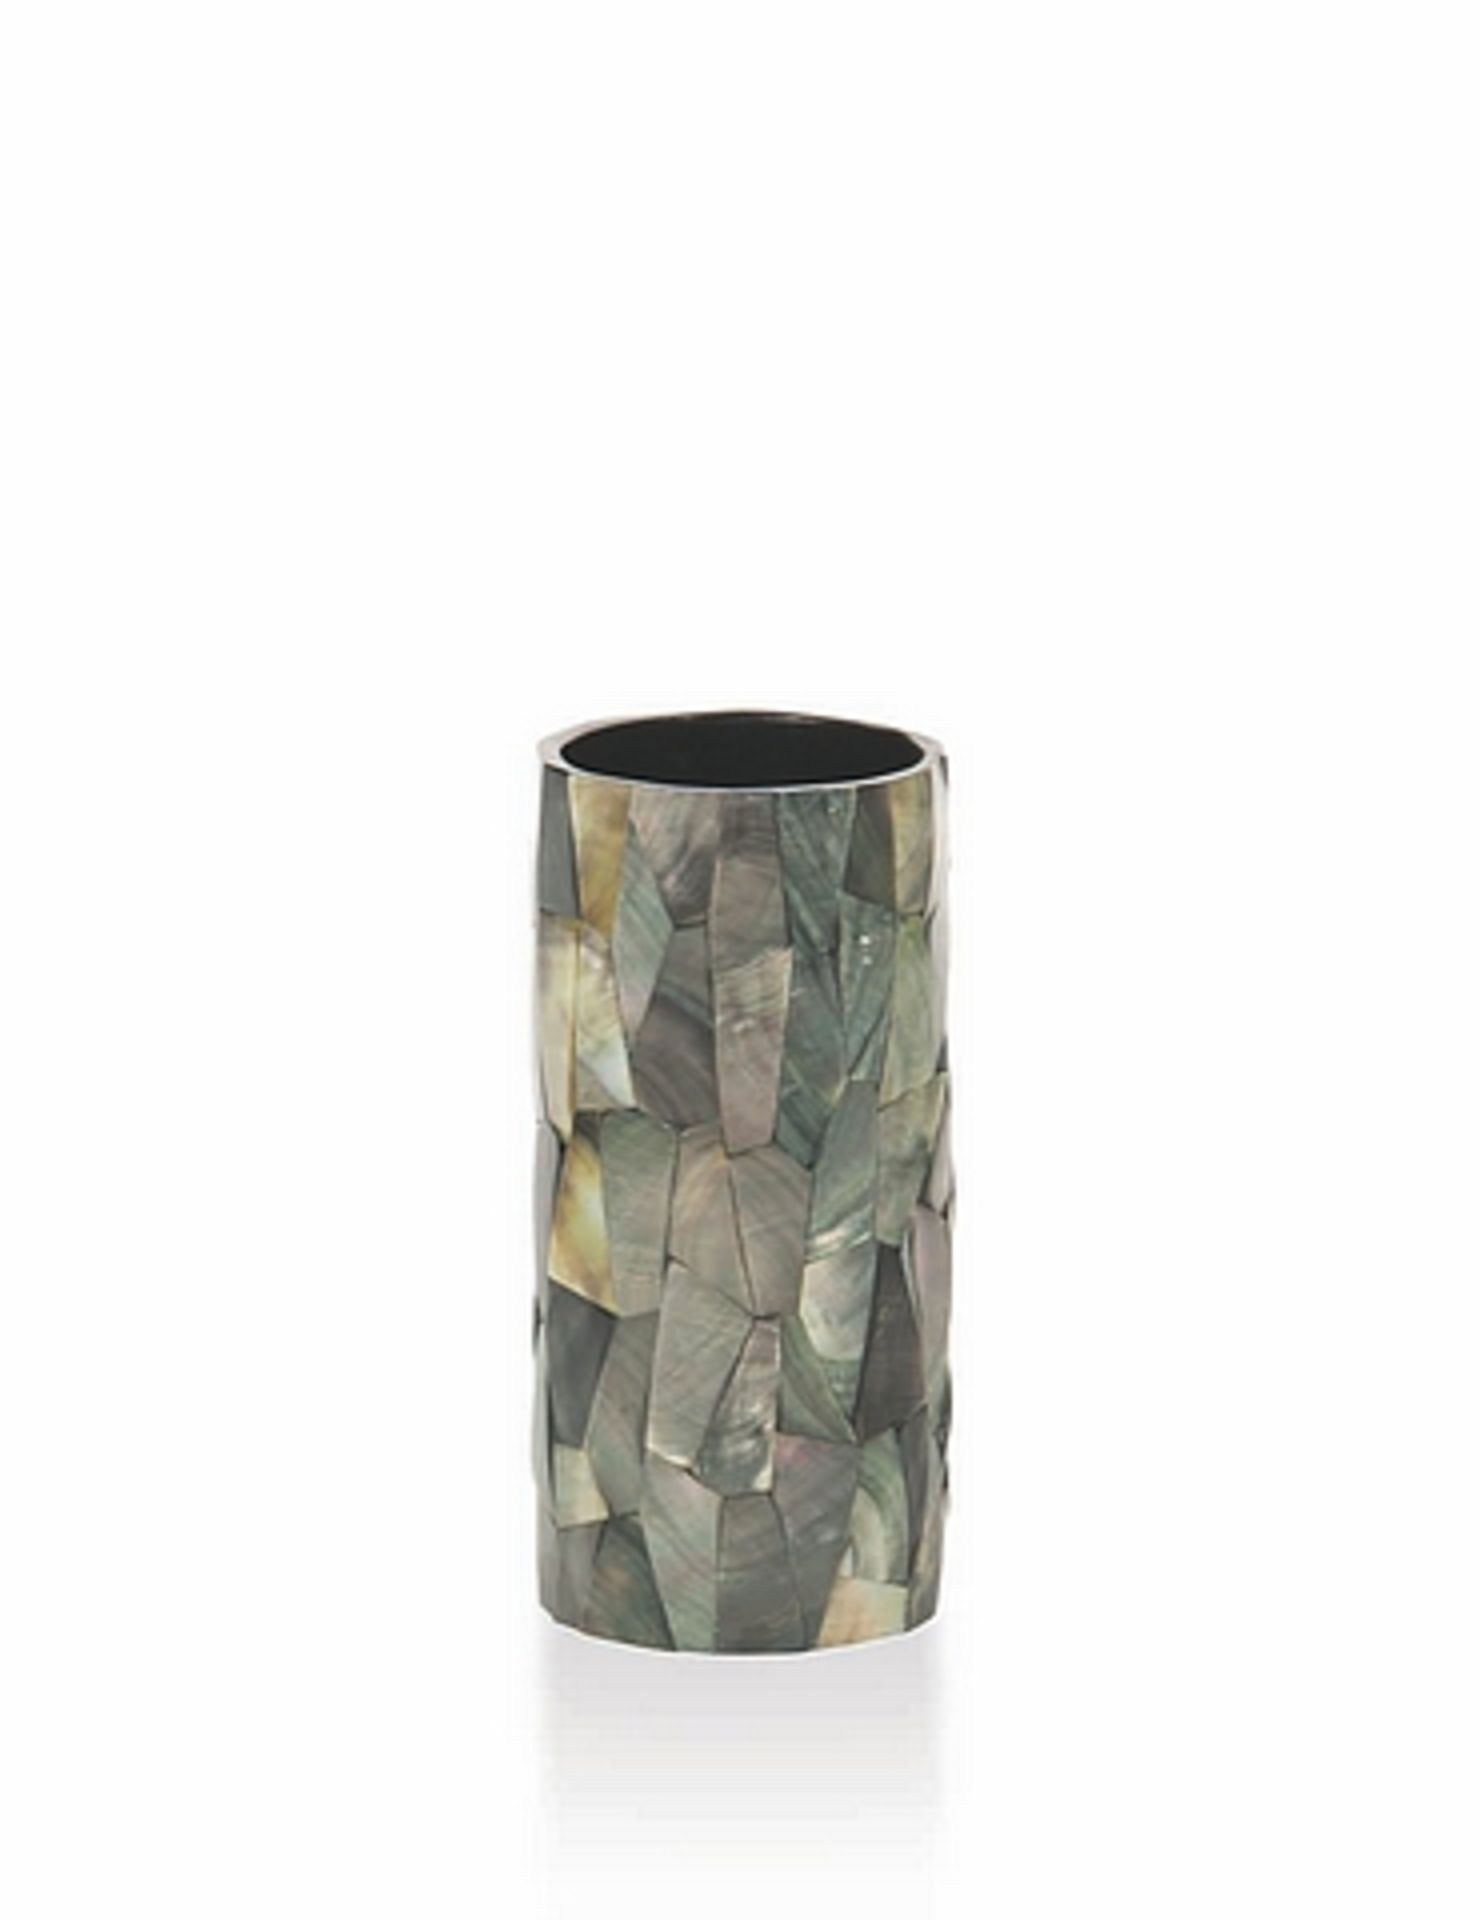 Vase cylinder medium crazycut black lip shell polished. An aesthetically pleasing modern home